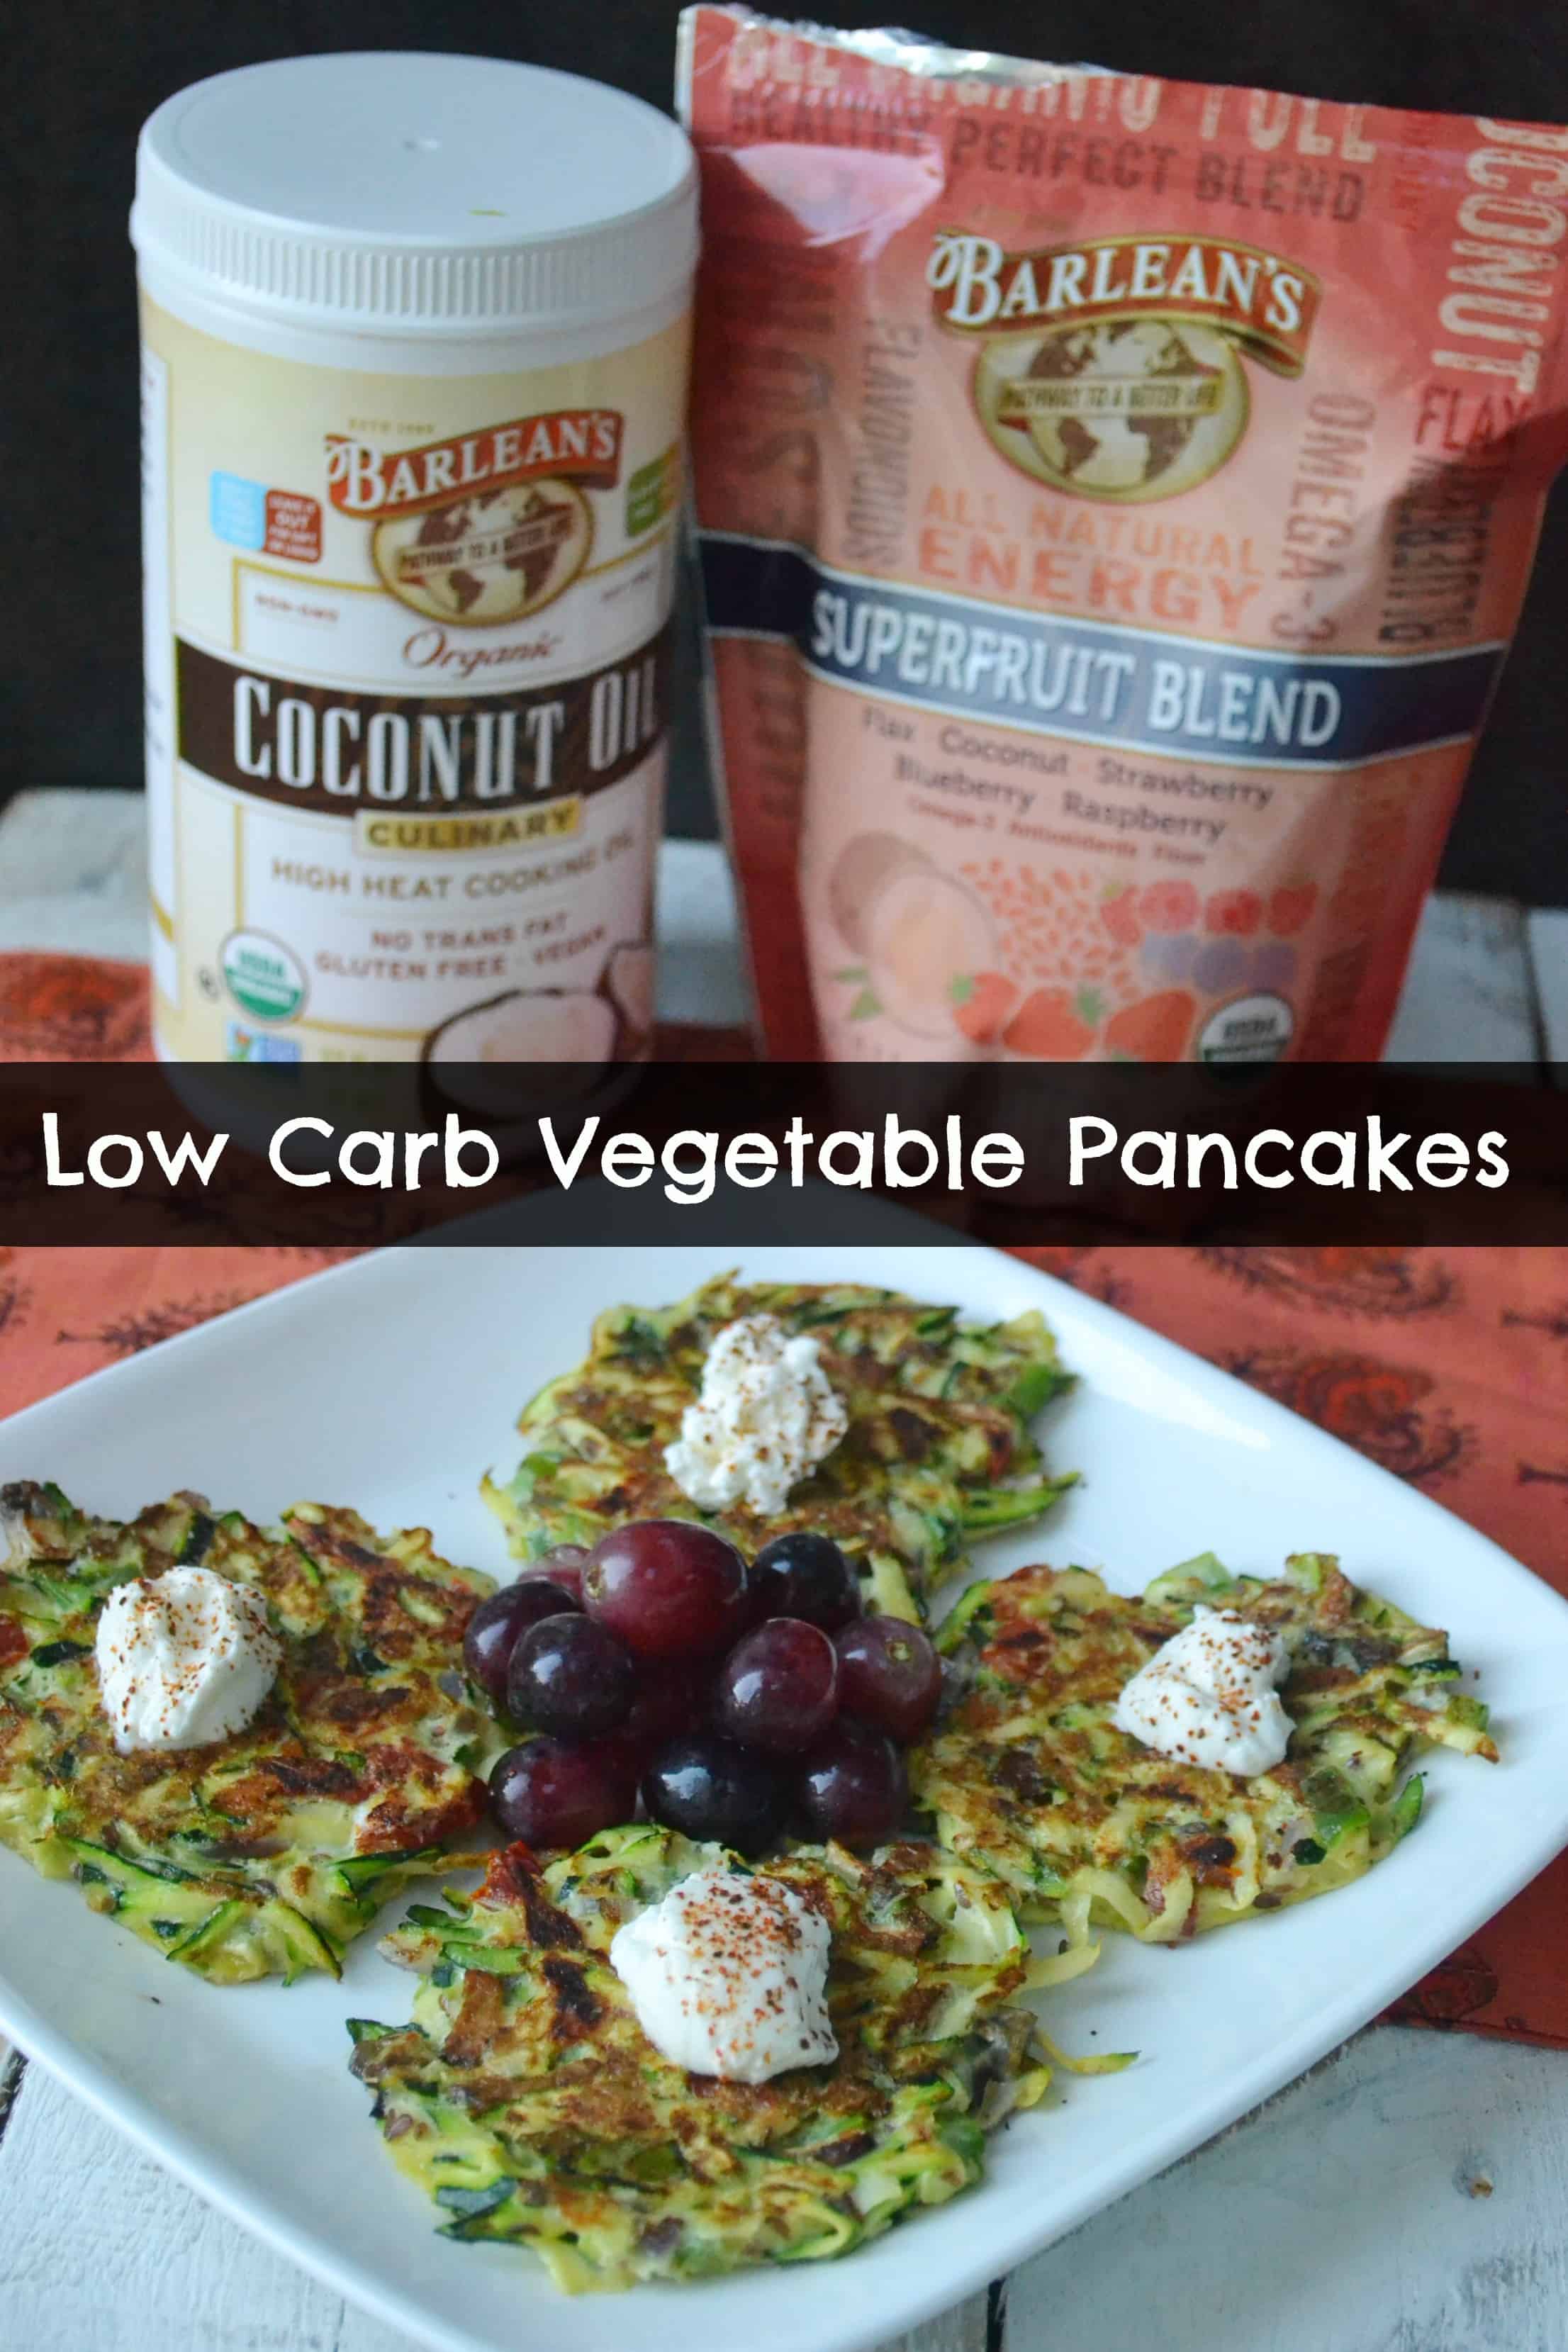 Low Carb Vegetable Pancakes recipe